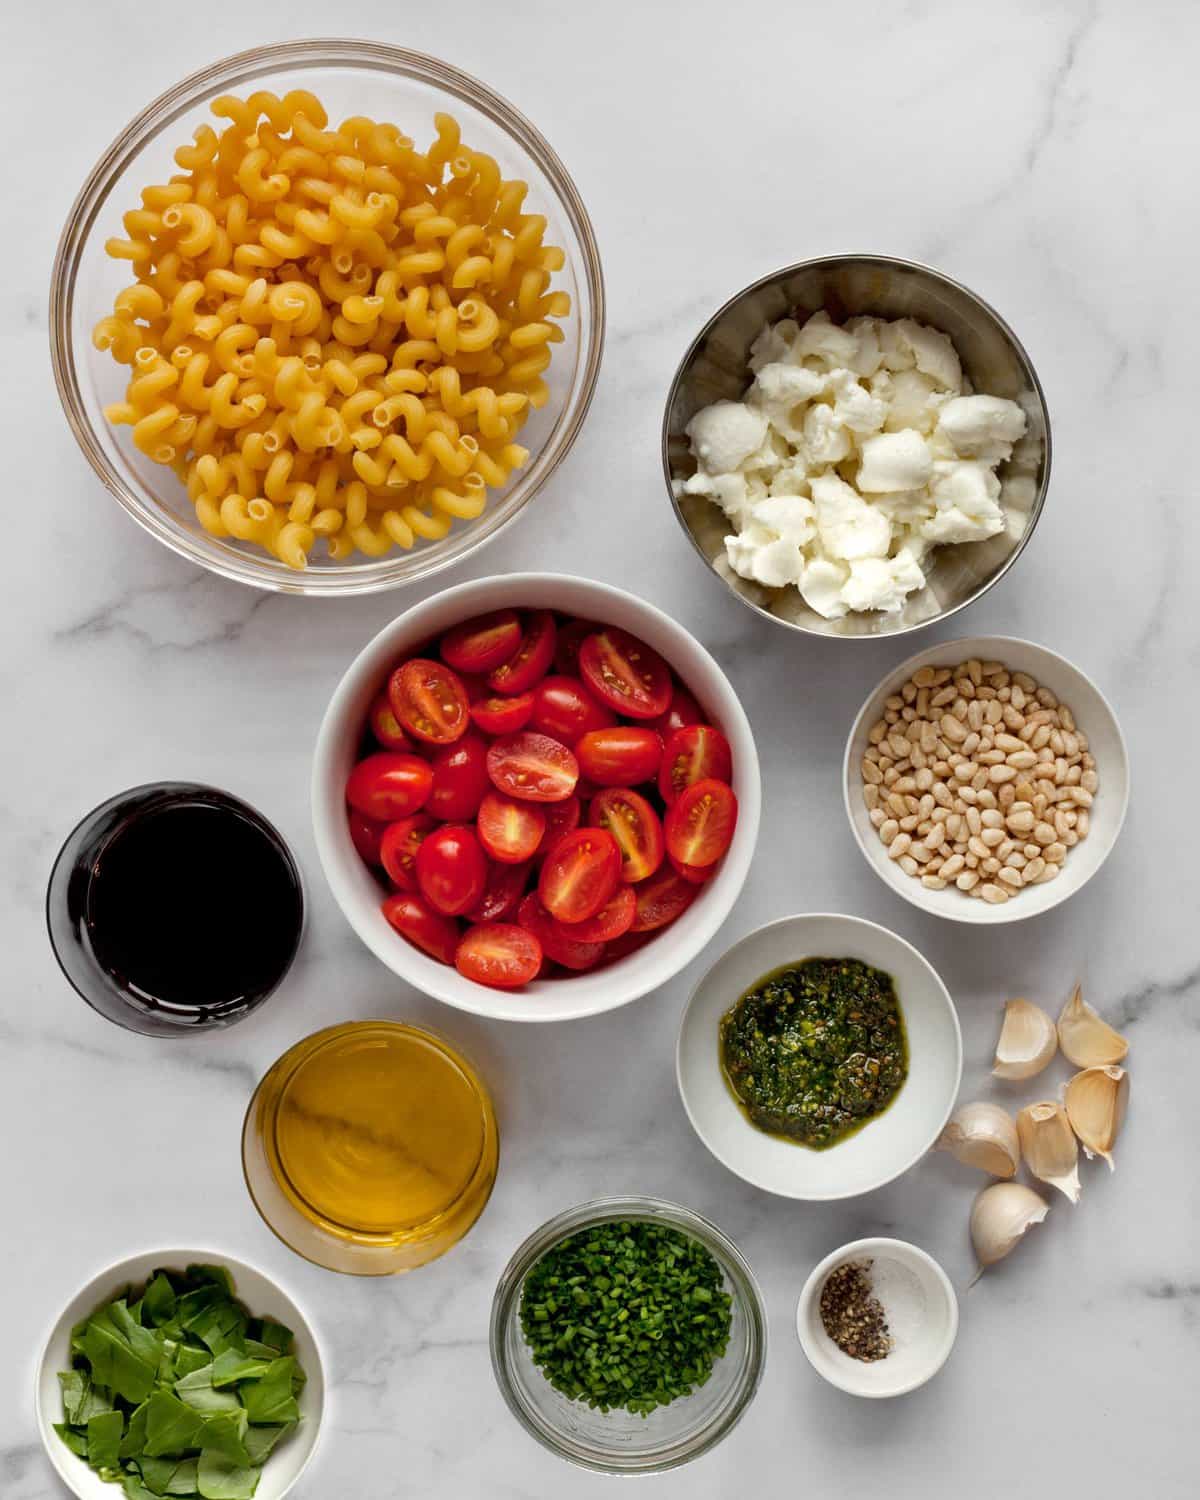 Ingredients including pasta, tomatoes, mozzarella, basil, pesto, olive oil and garlic.